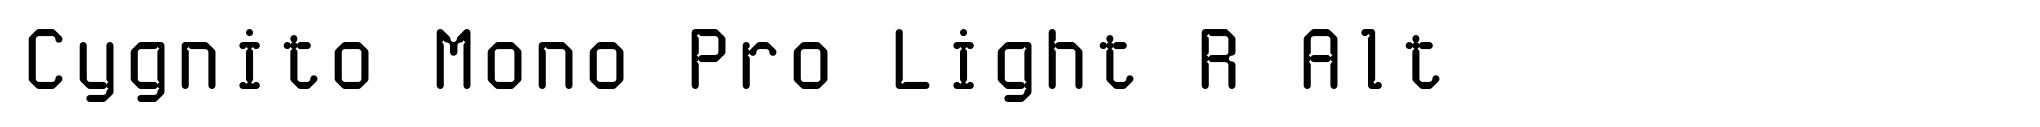 Cygnito Mono Pro Light R Alt image